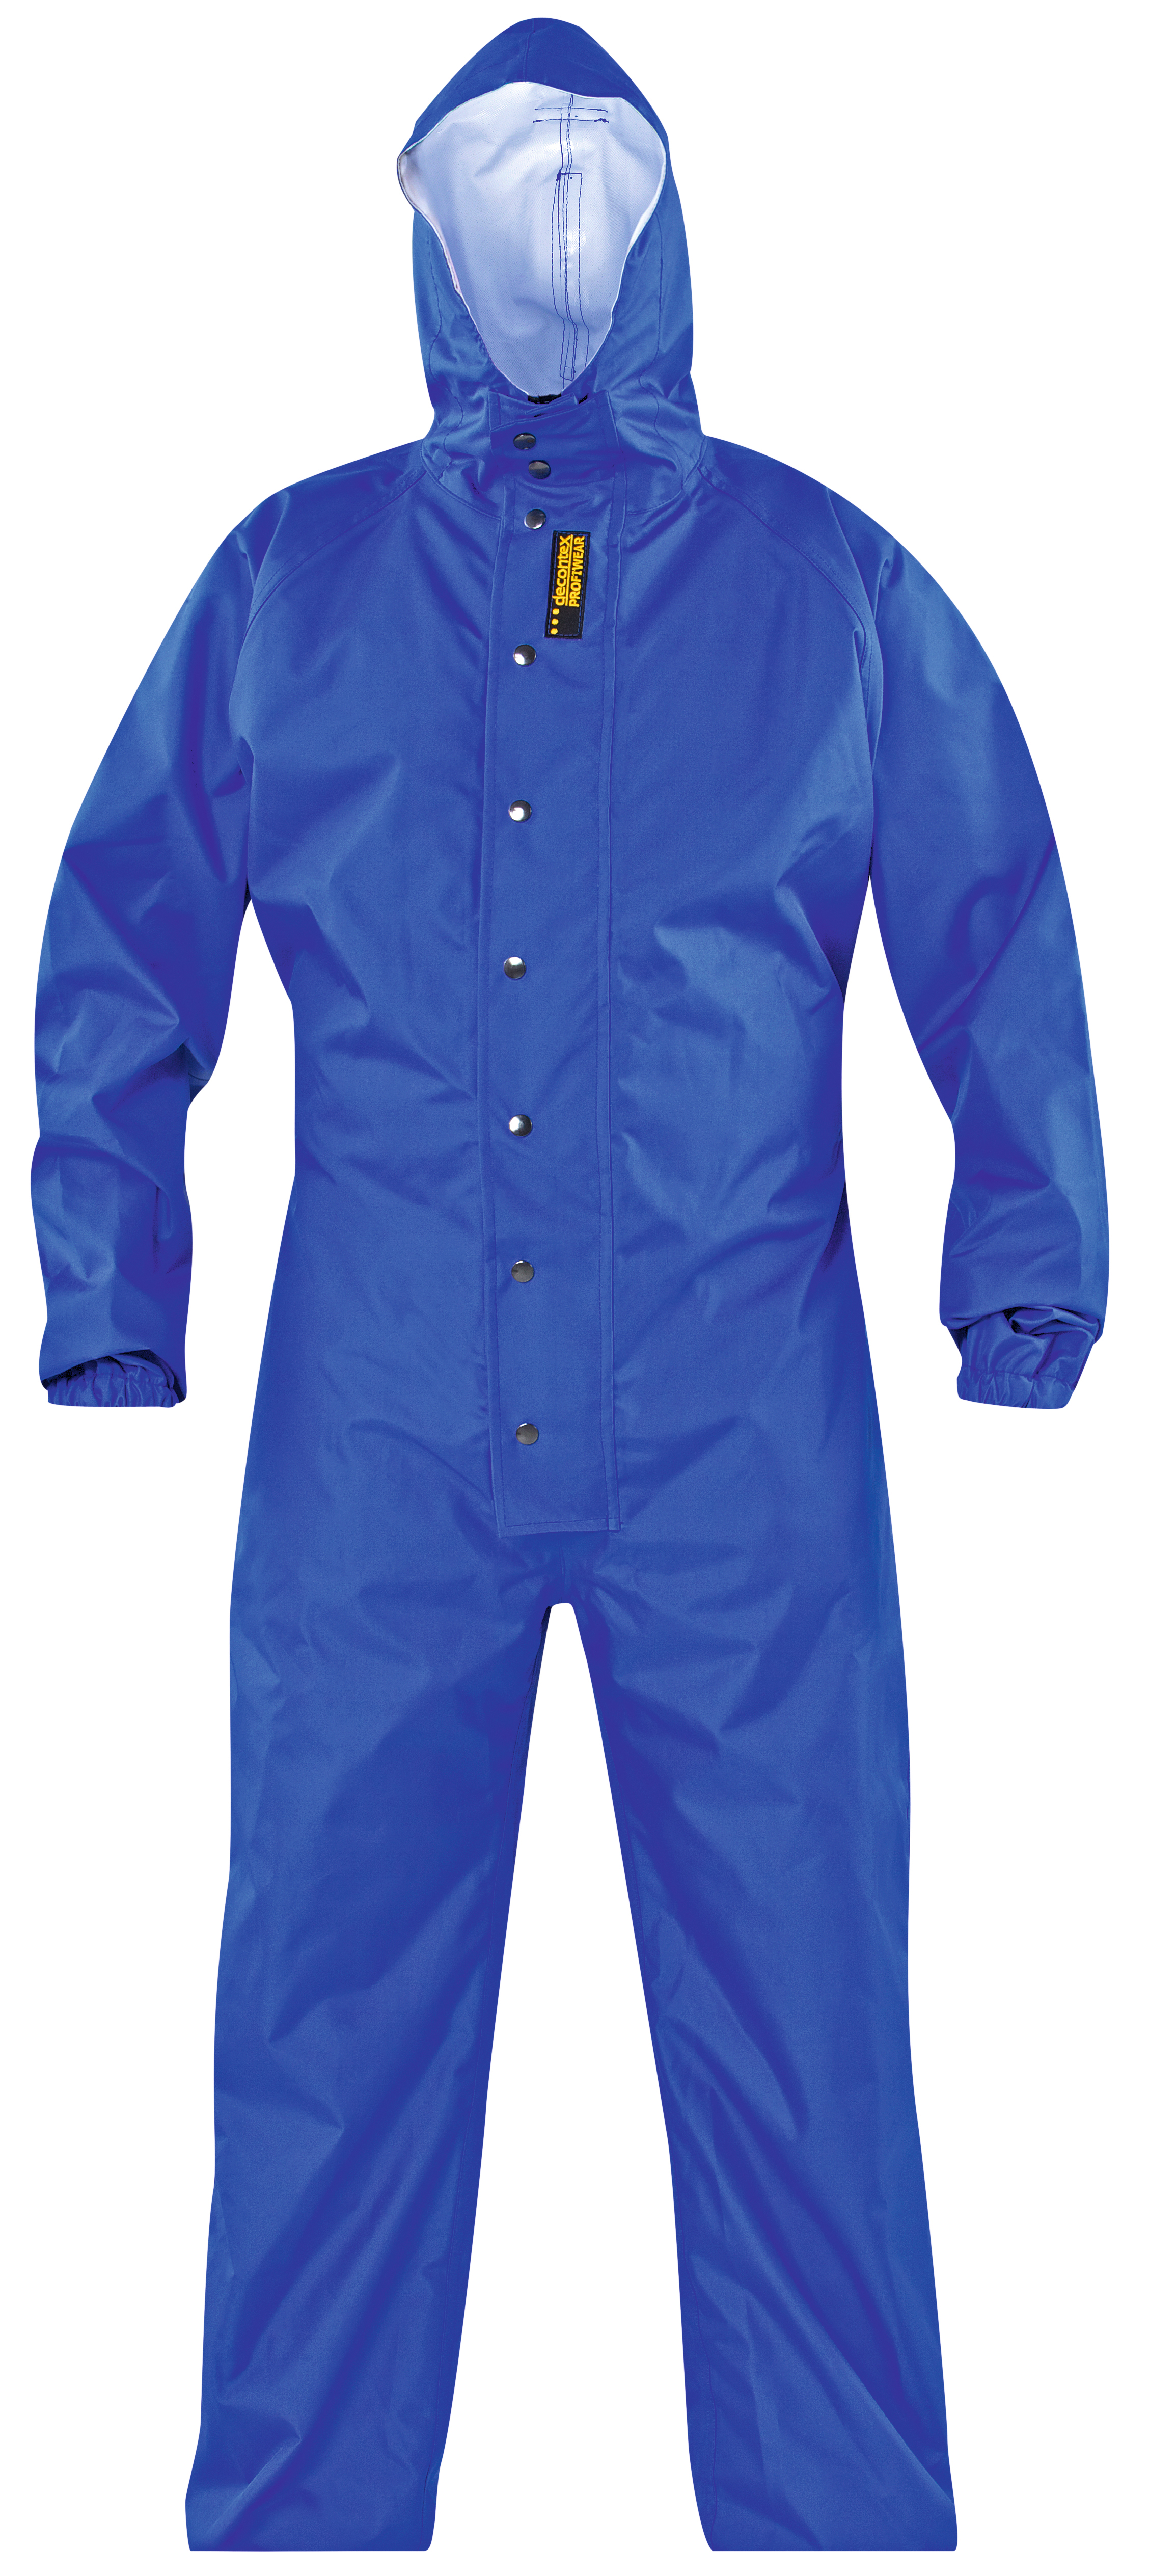 KIND-Regenschutz, Decontex-Schutzkleidung BT, Regen-Nässe-Schutz-Overall, blau